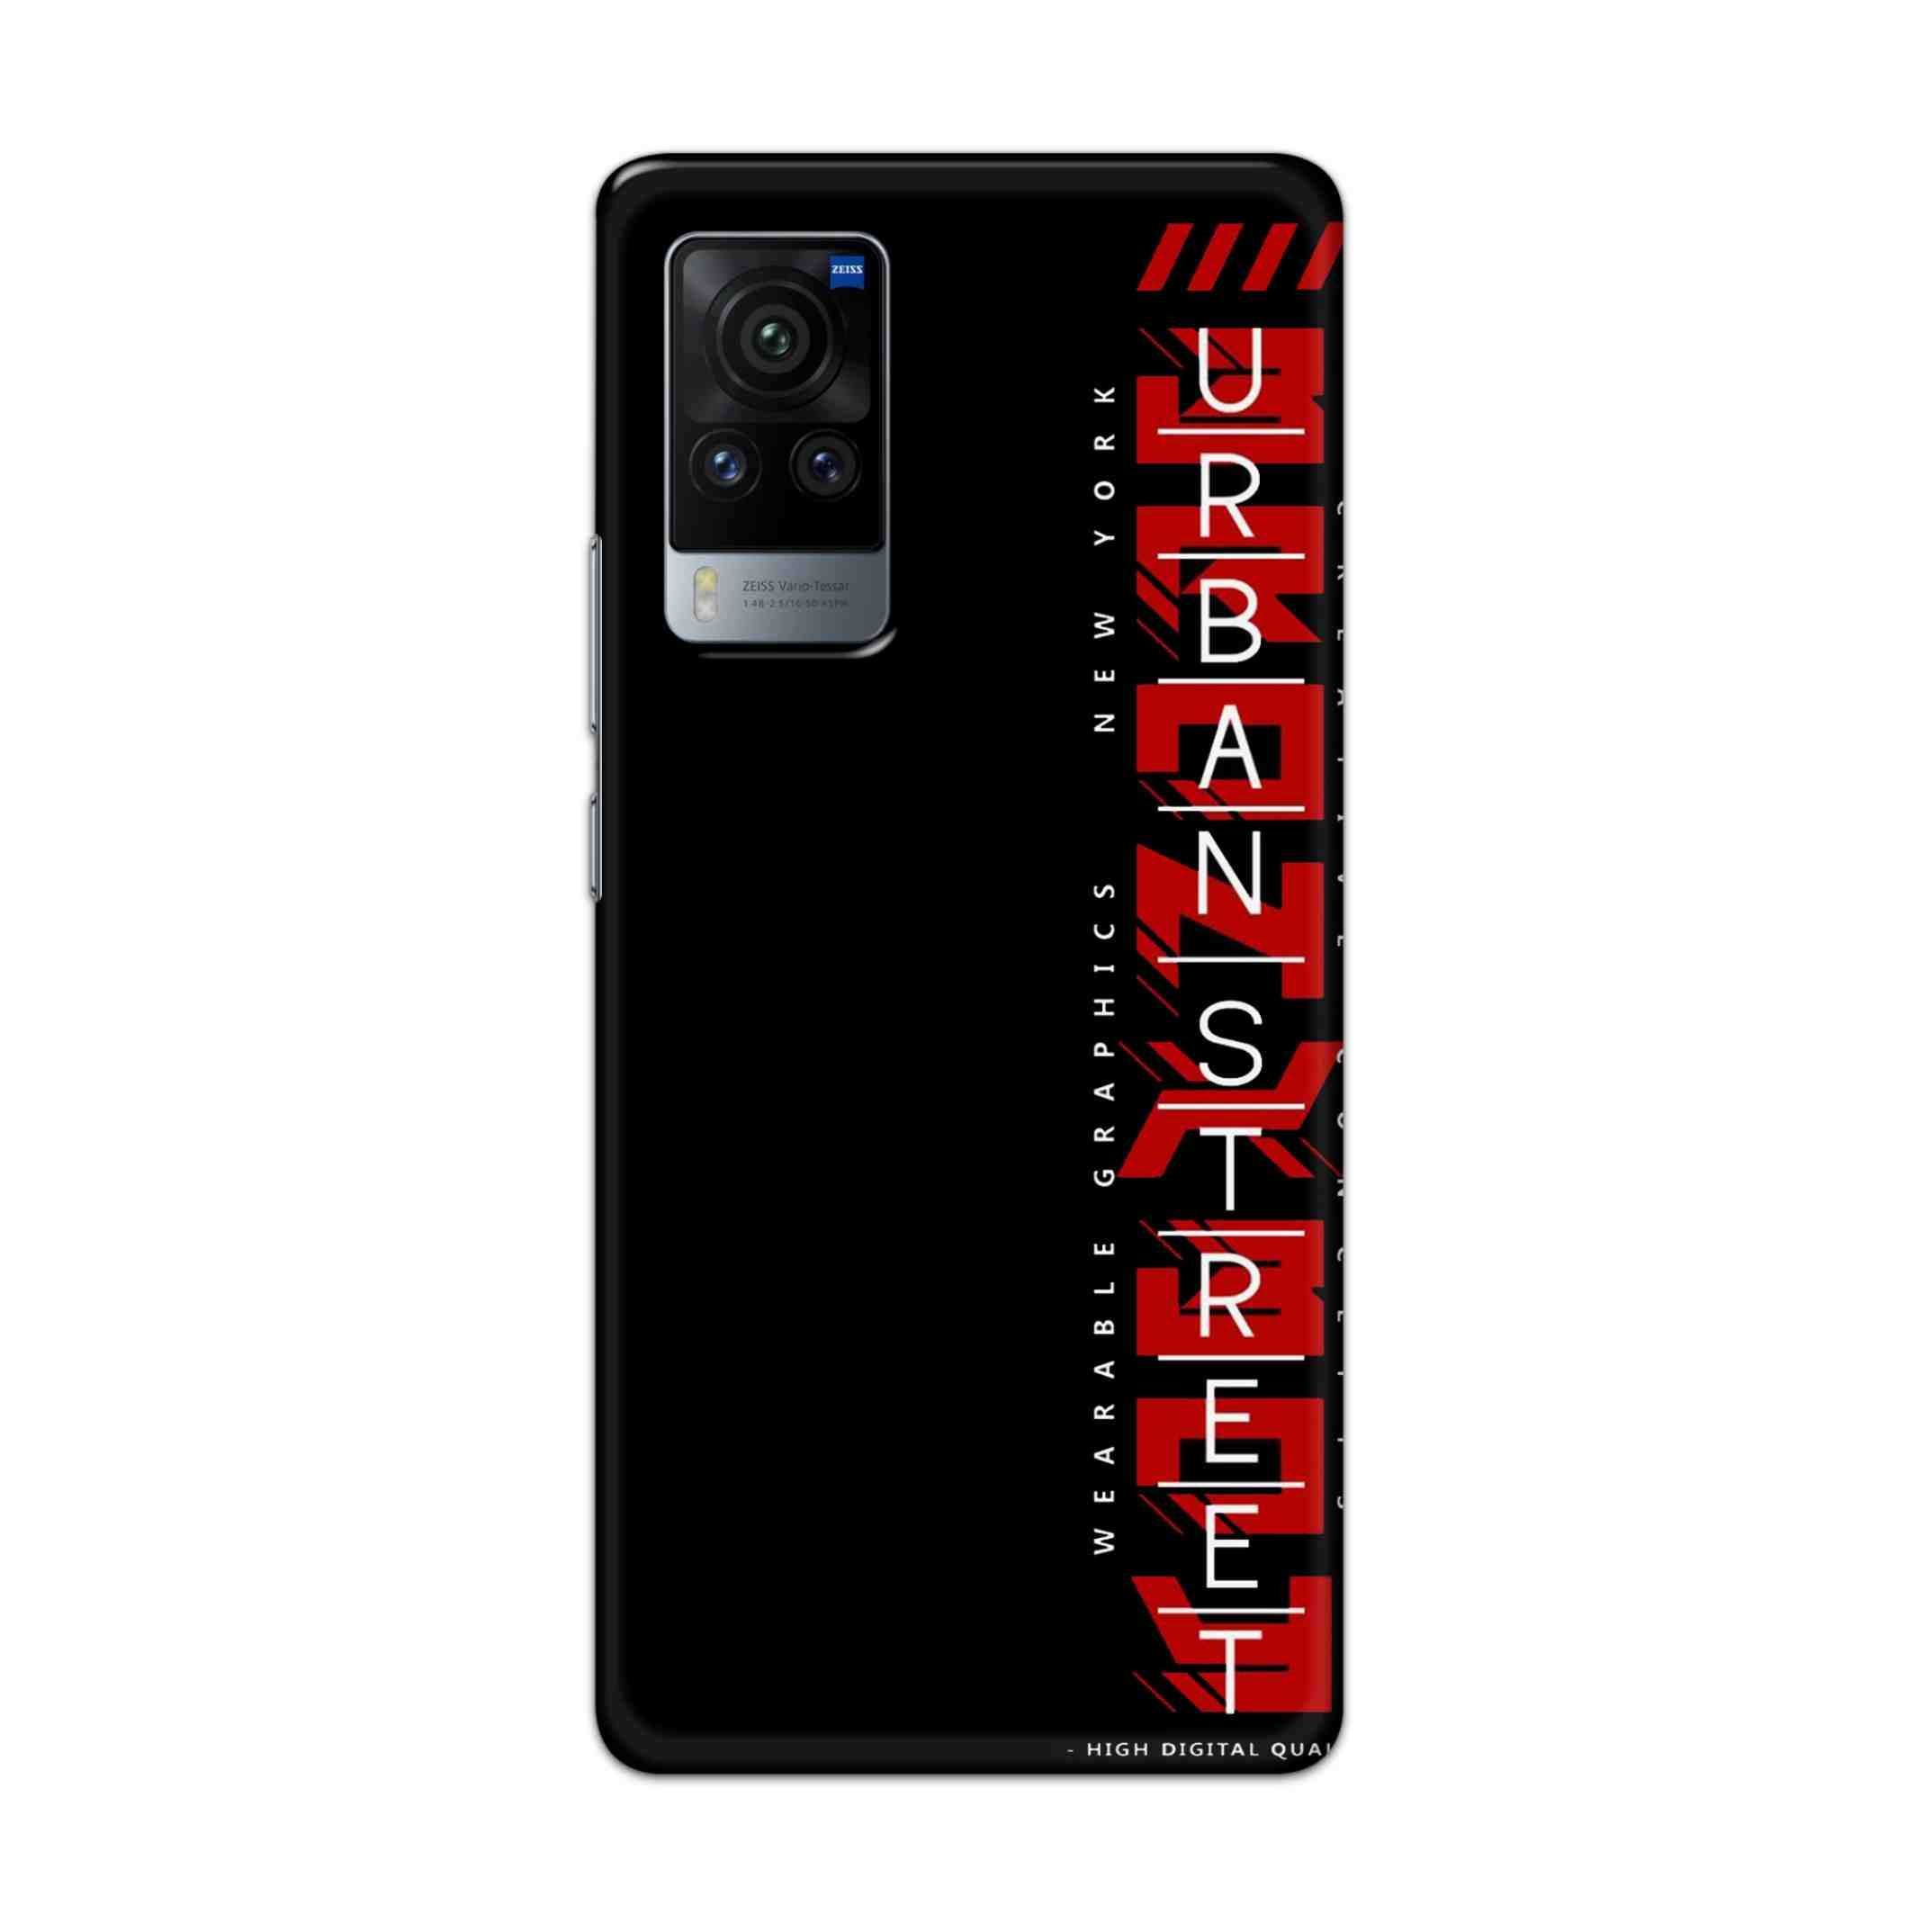 Buy Urban Street Hard Back Mobile Phone Case Cover For Vivo X60 Pro Online